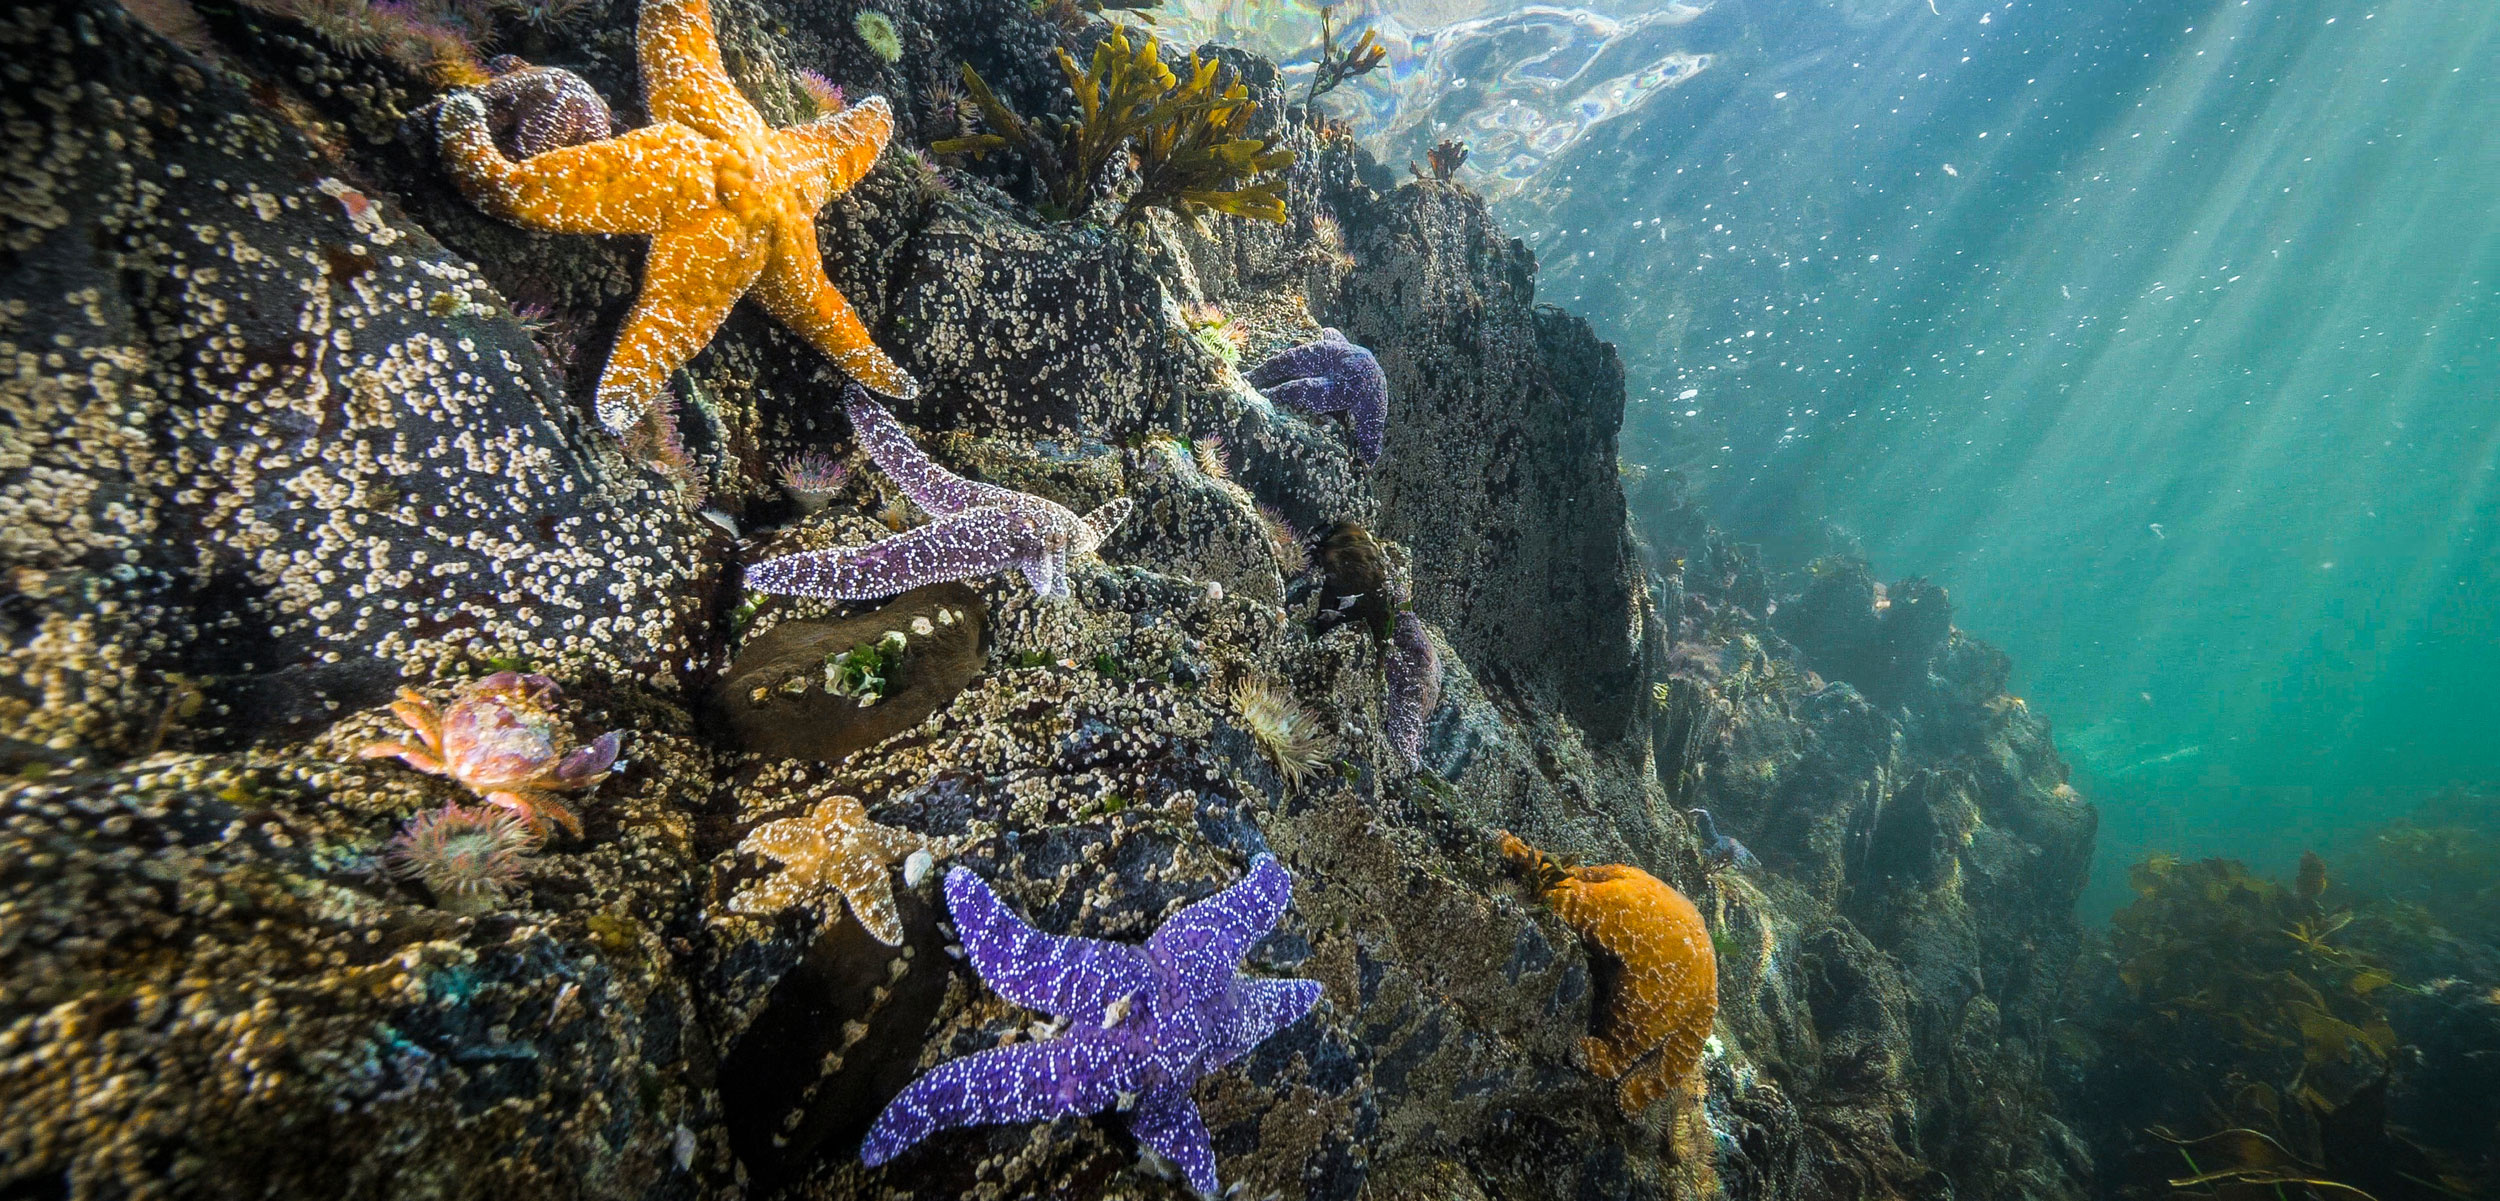 Sea Star: The Ochre Sea Star, Underwater Creatures, Ocean, Coral. 2500x1210 Dual Screen Wallpaper.